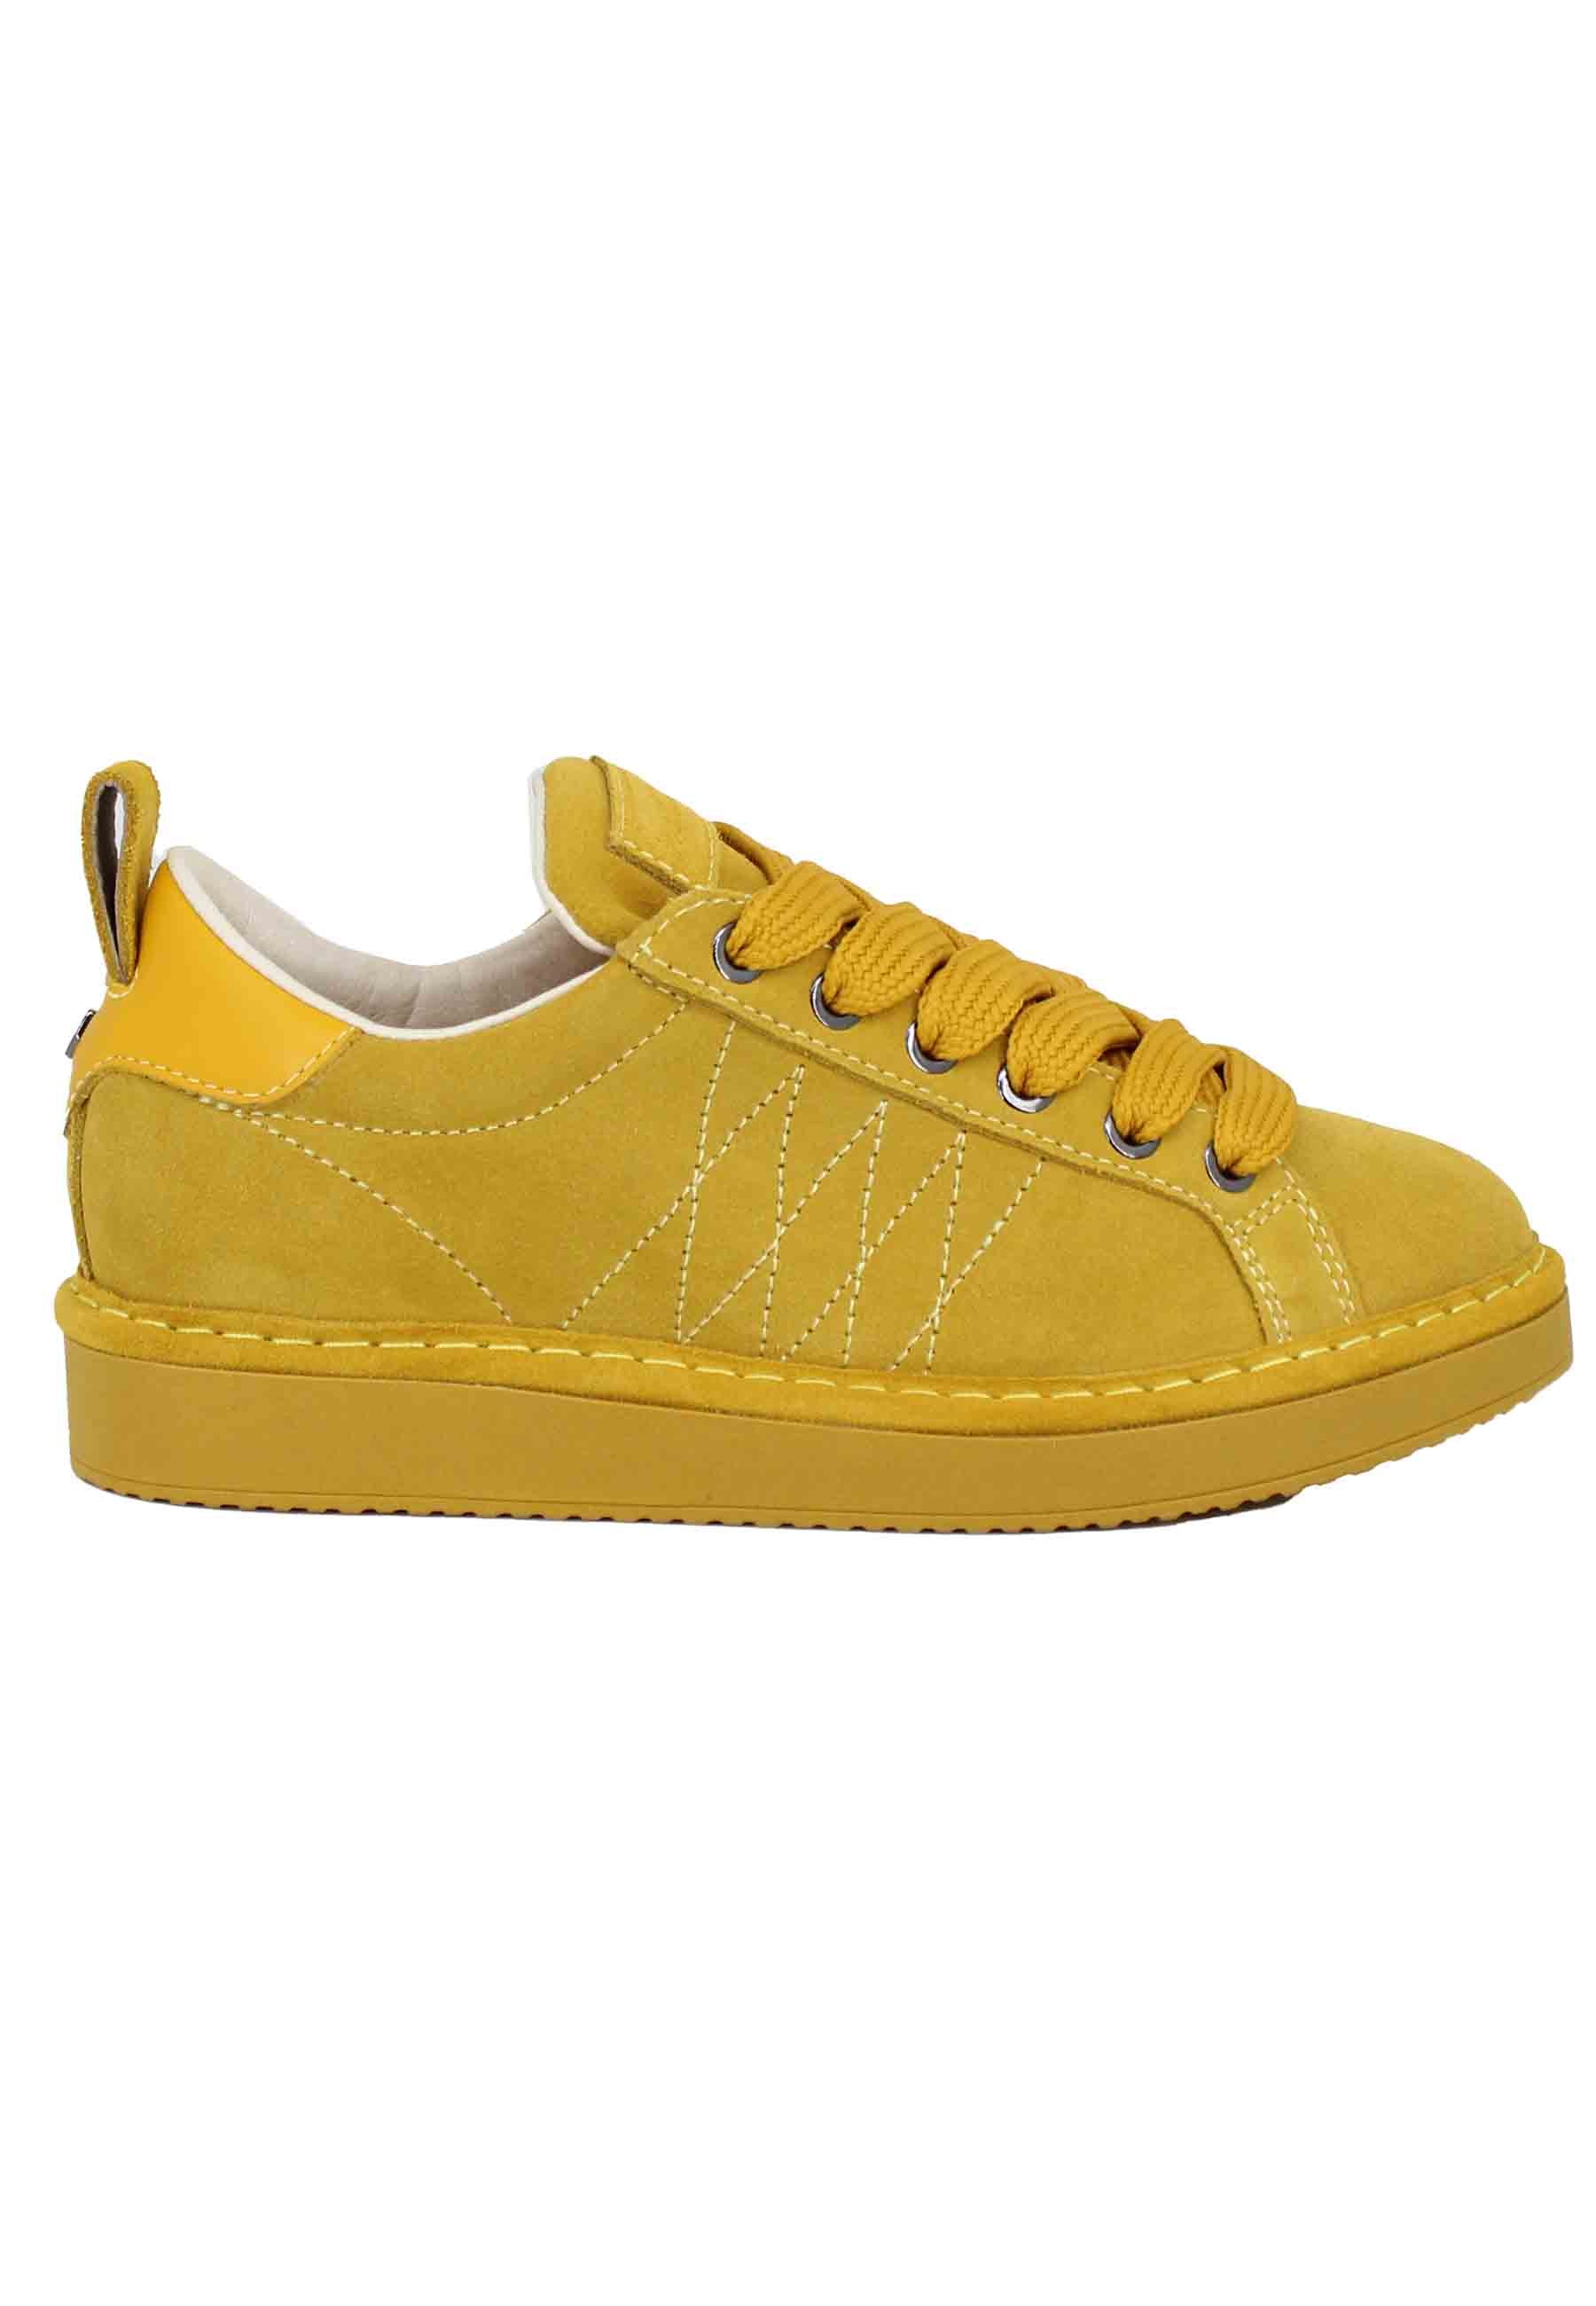 Women's sneakers in yellow eco suede